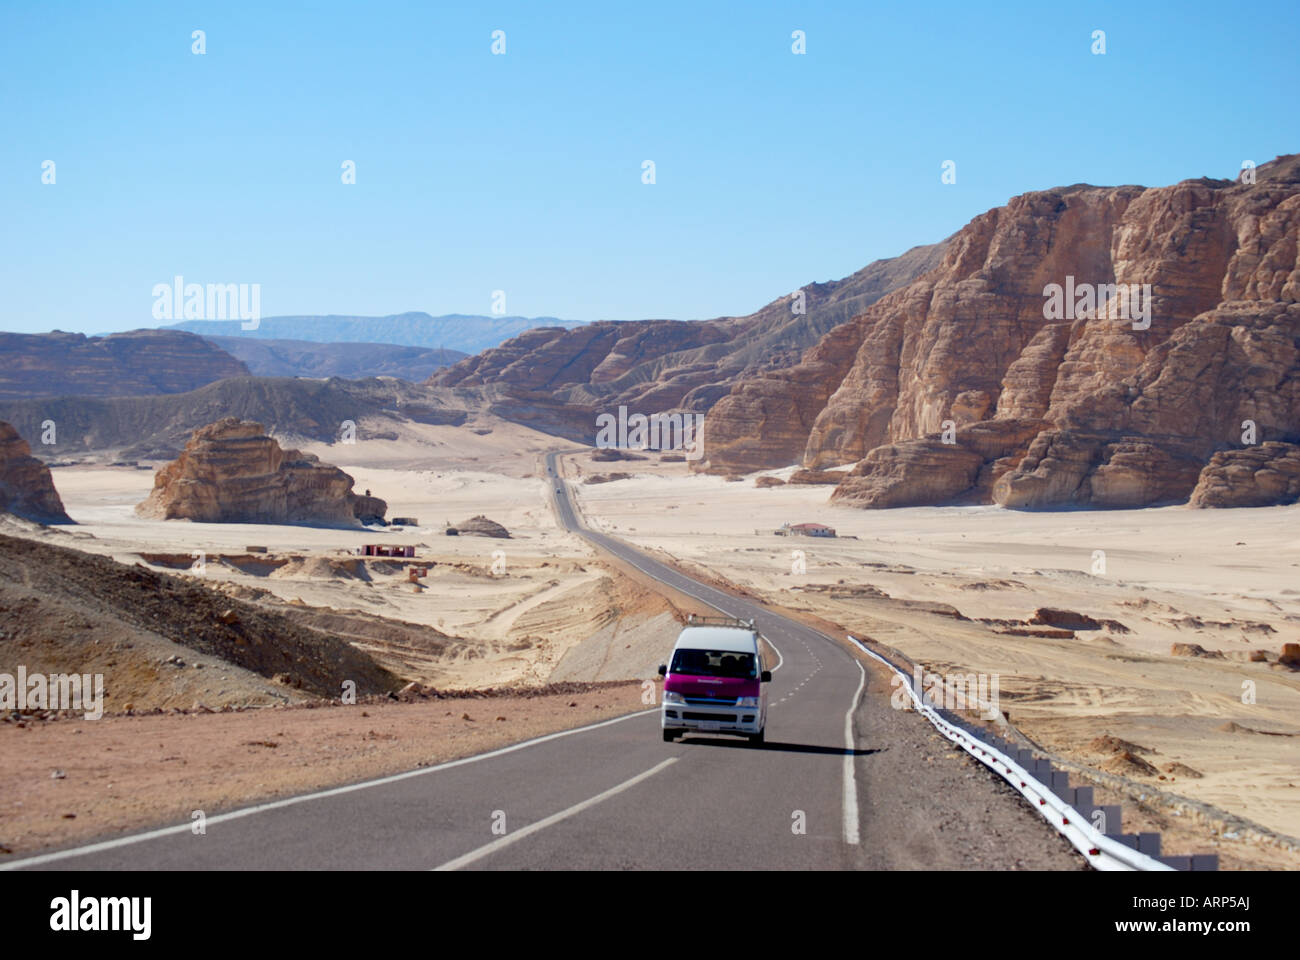 Road through desert landscape, Sinai Peninsula, Republic of Egypt Stock Photo